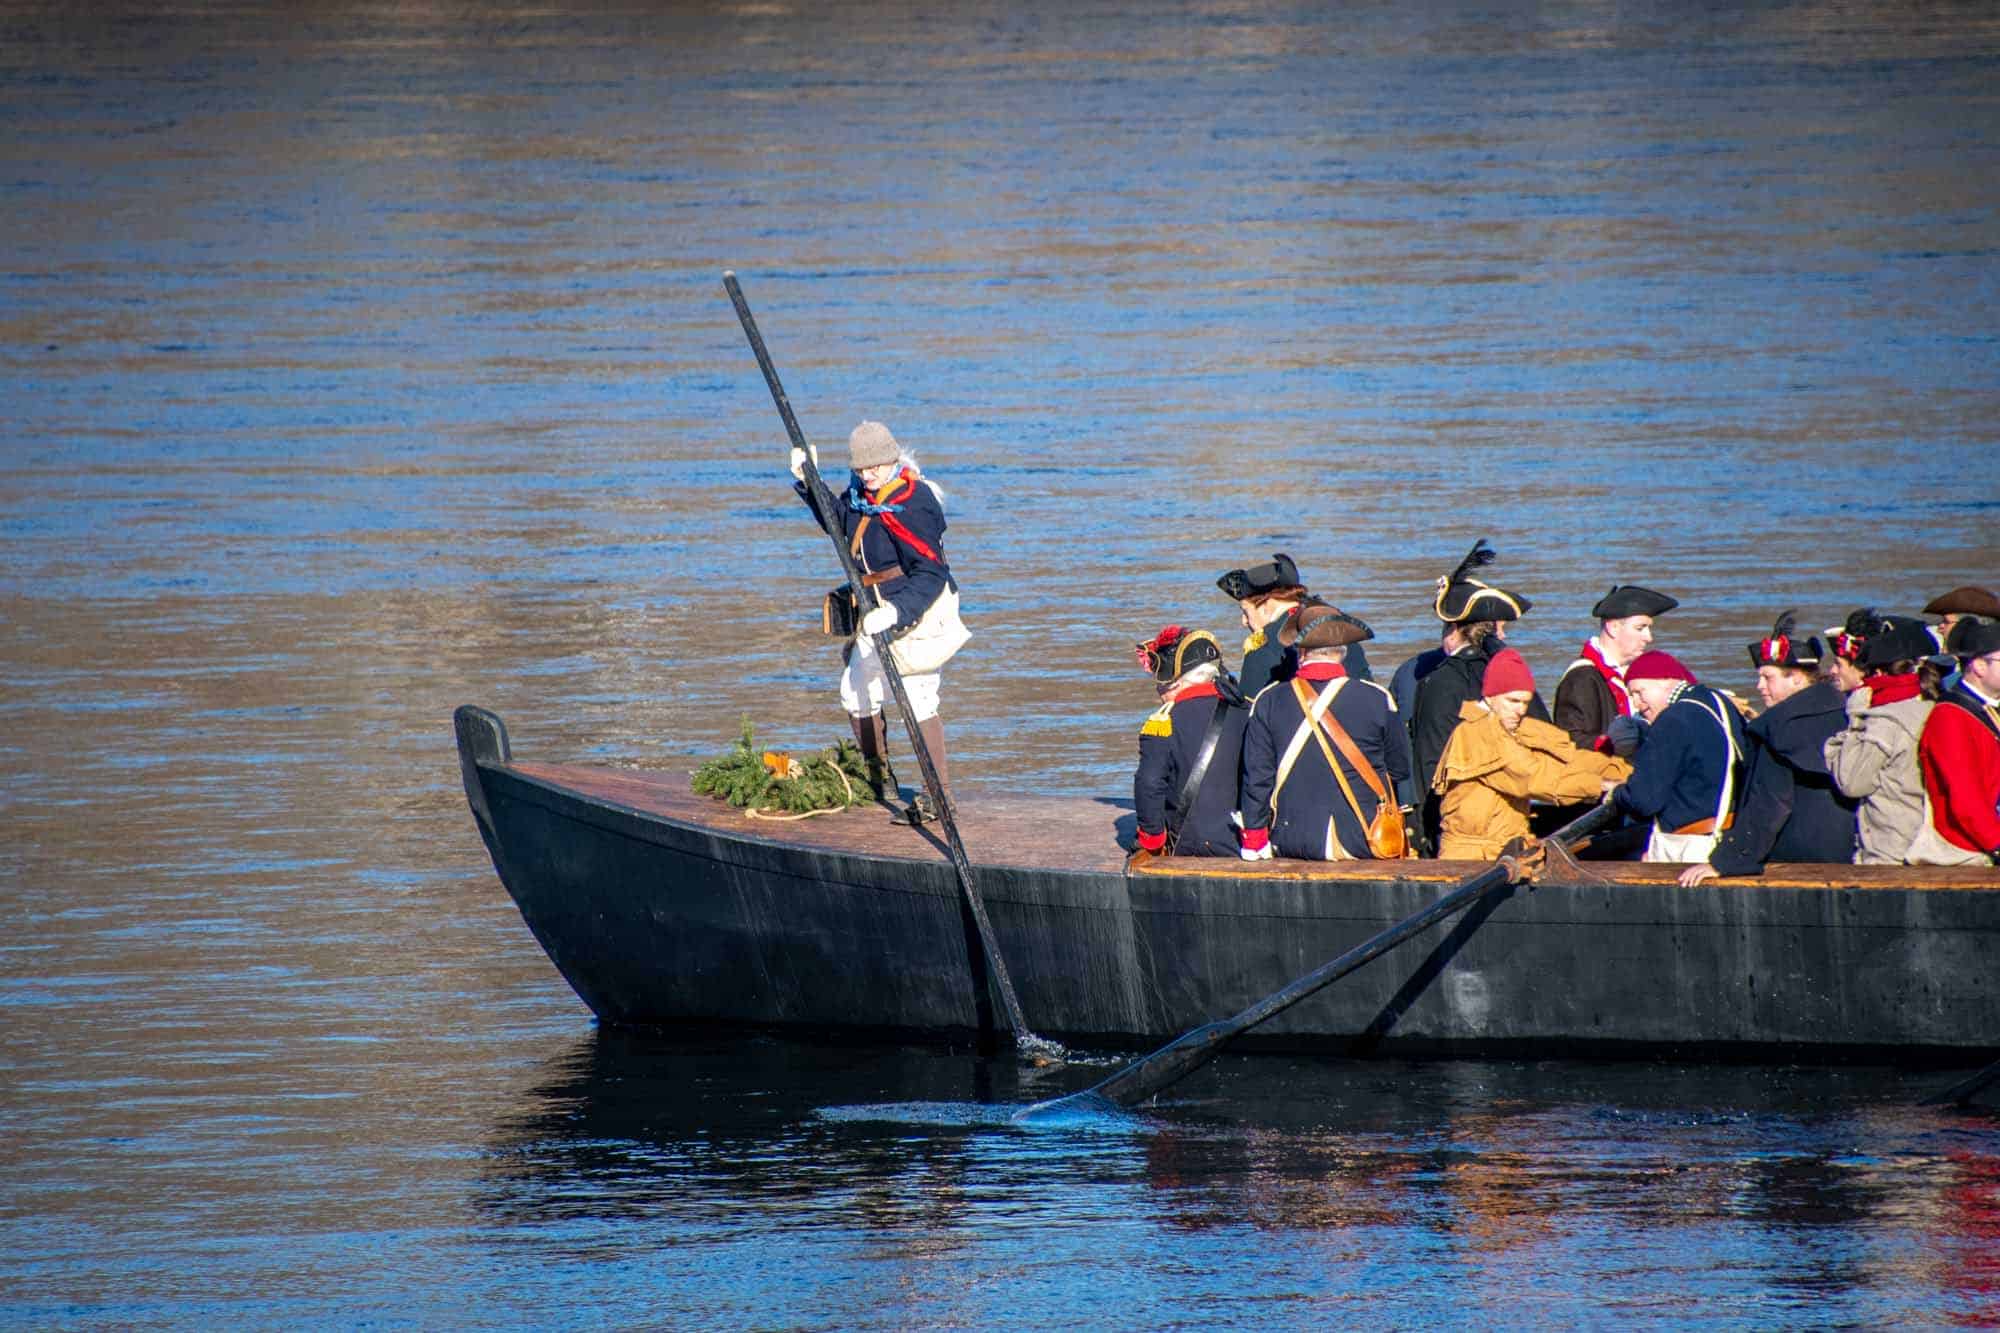 Reenators in Revolutionary-era dress row boats across the Delaware River